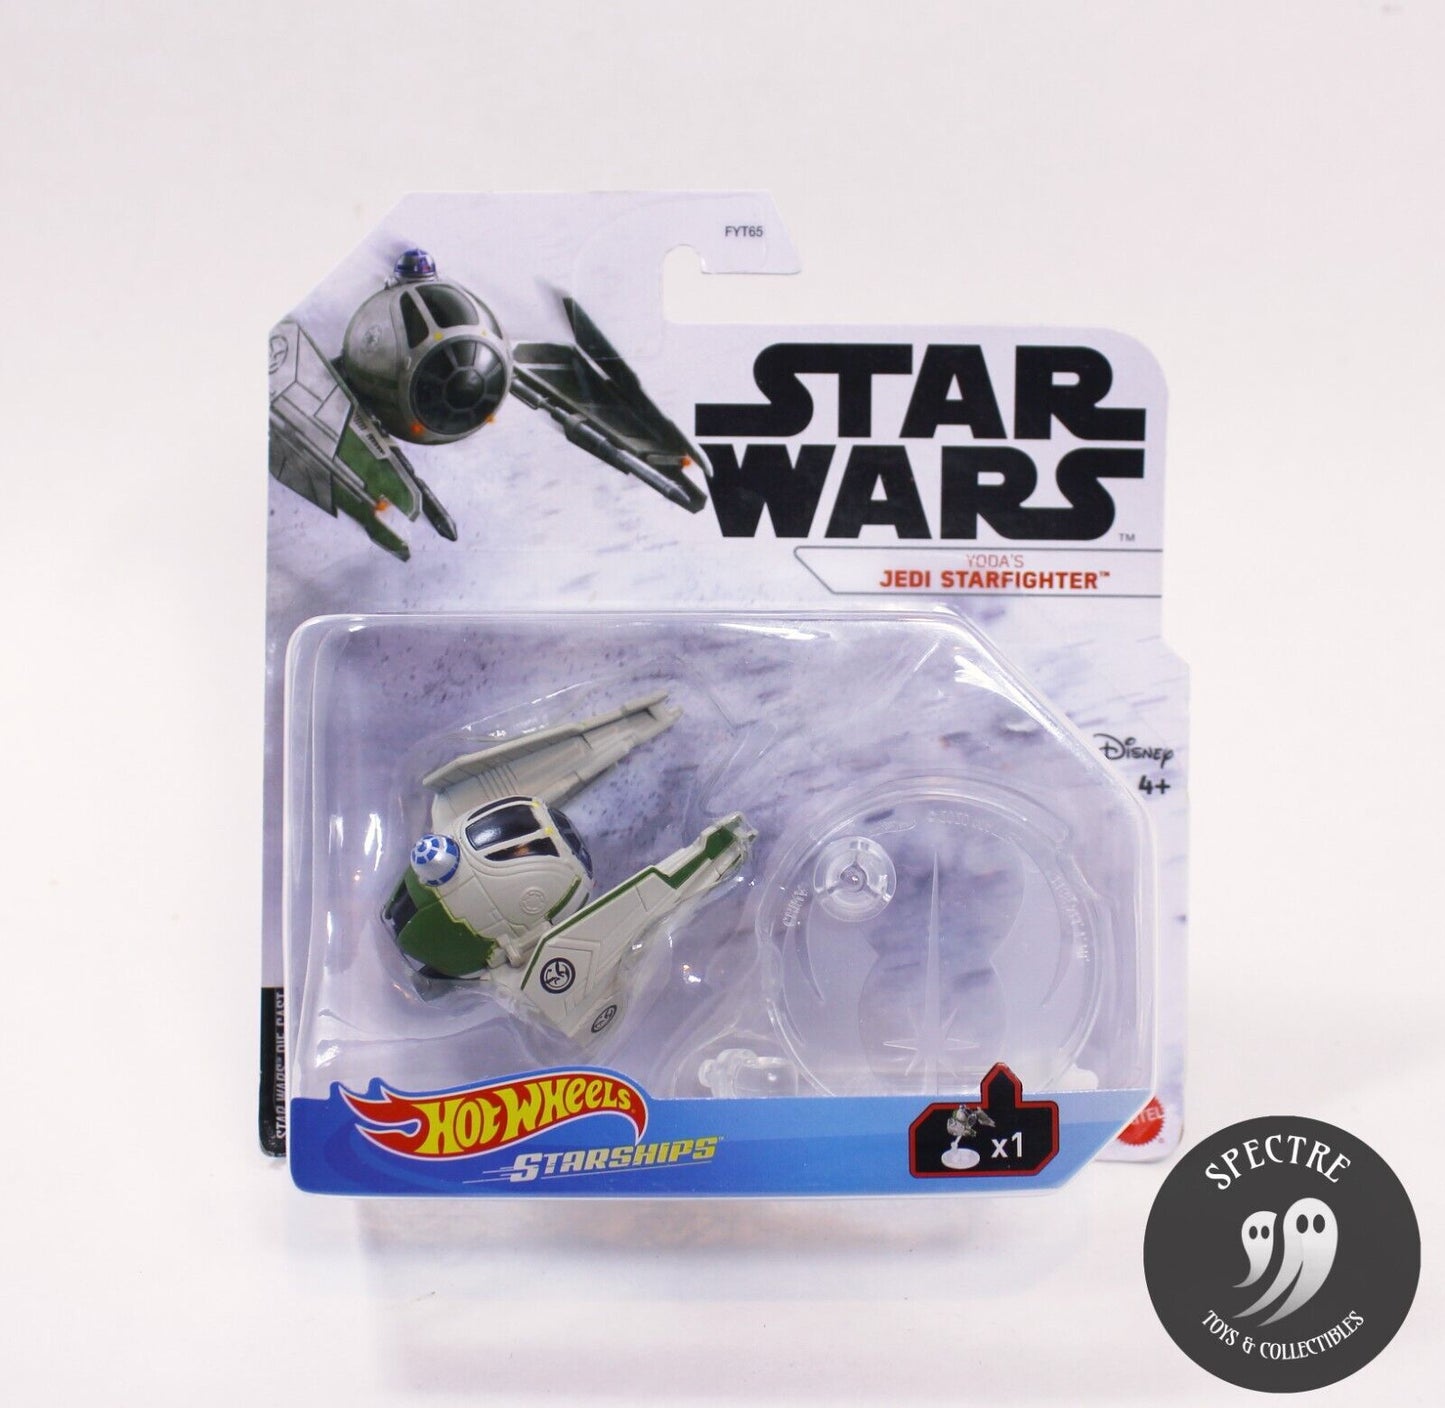 Hot Wheels Starships: Star wars Yoda Jedi Starfighter - Mattel Star Wars Diecast